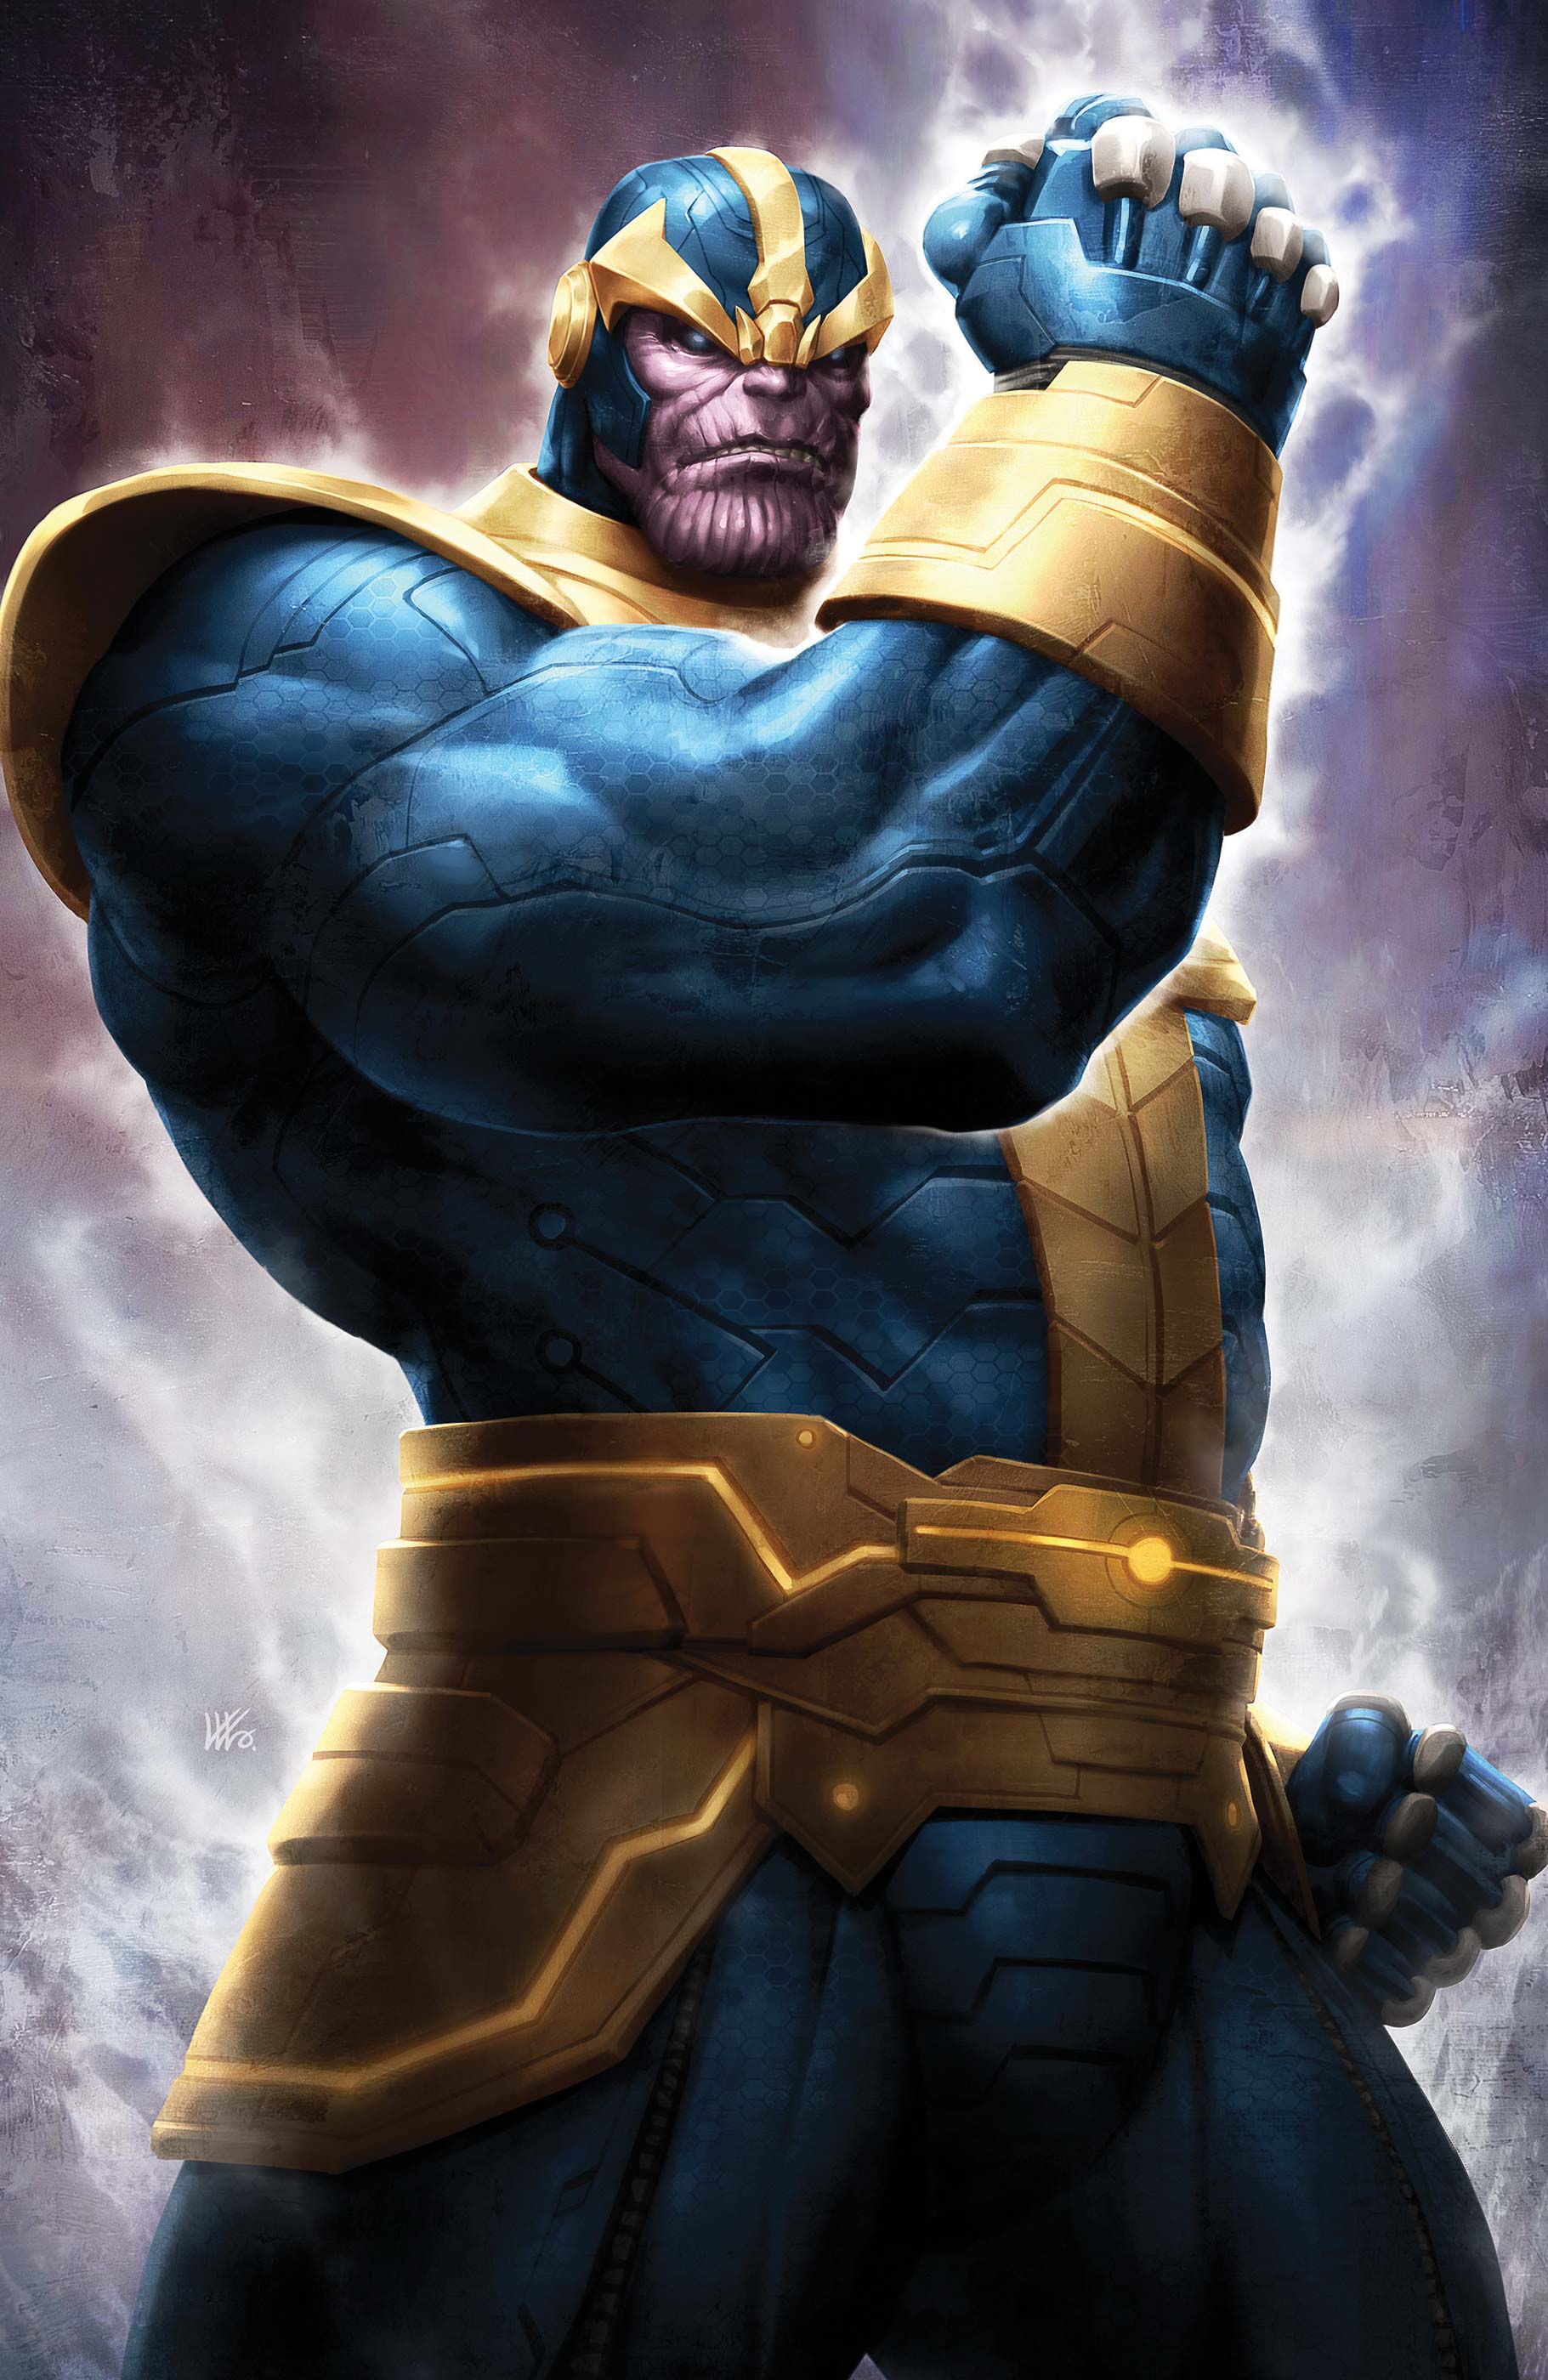 Thanos (2023) #1 (Variant)